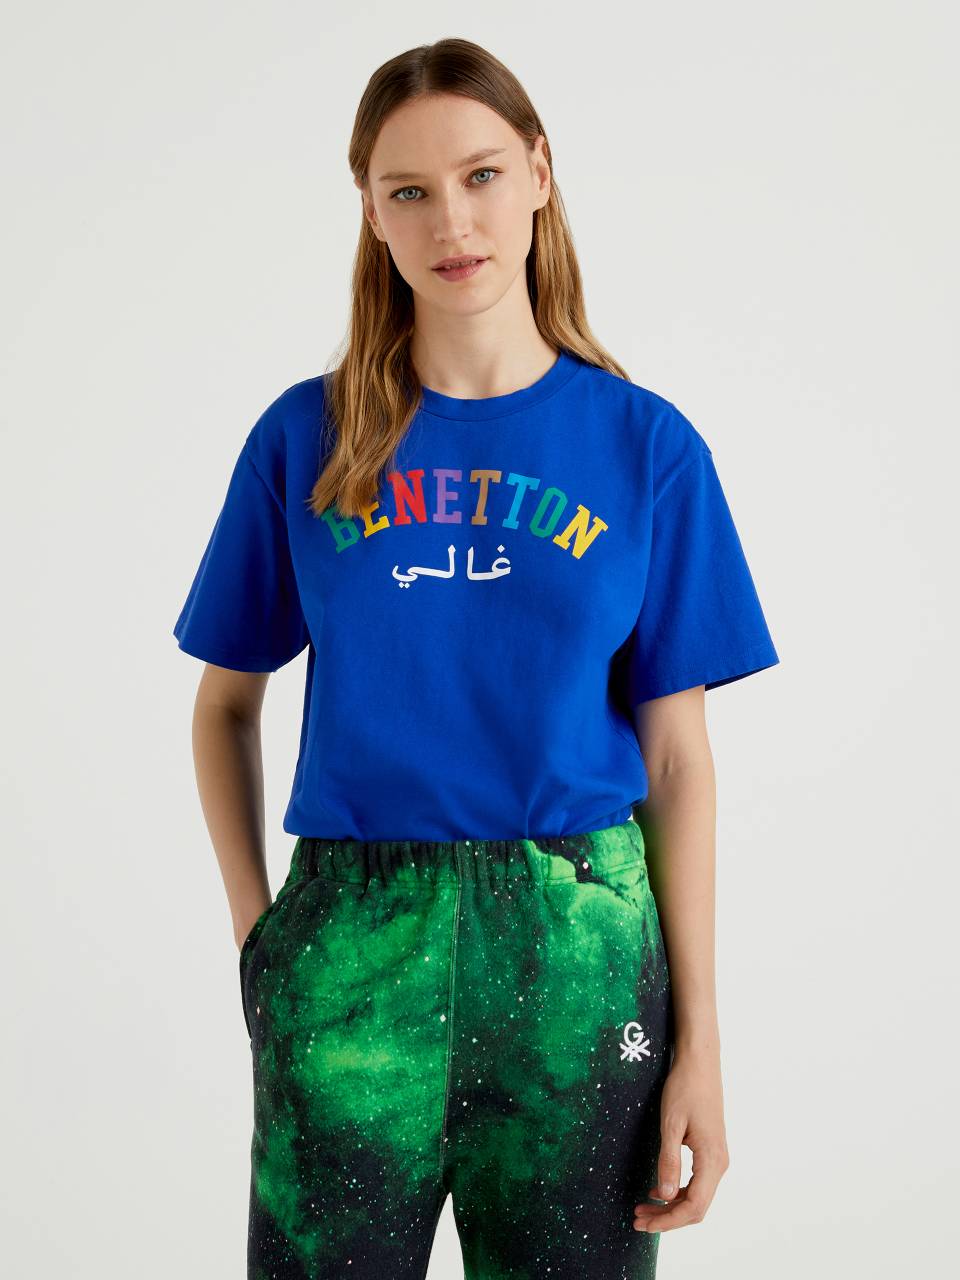 Benetton Cornflower blue t-shirt with print by Ghali. 1